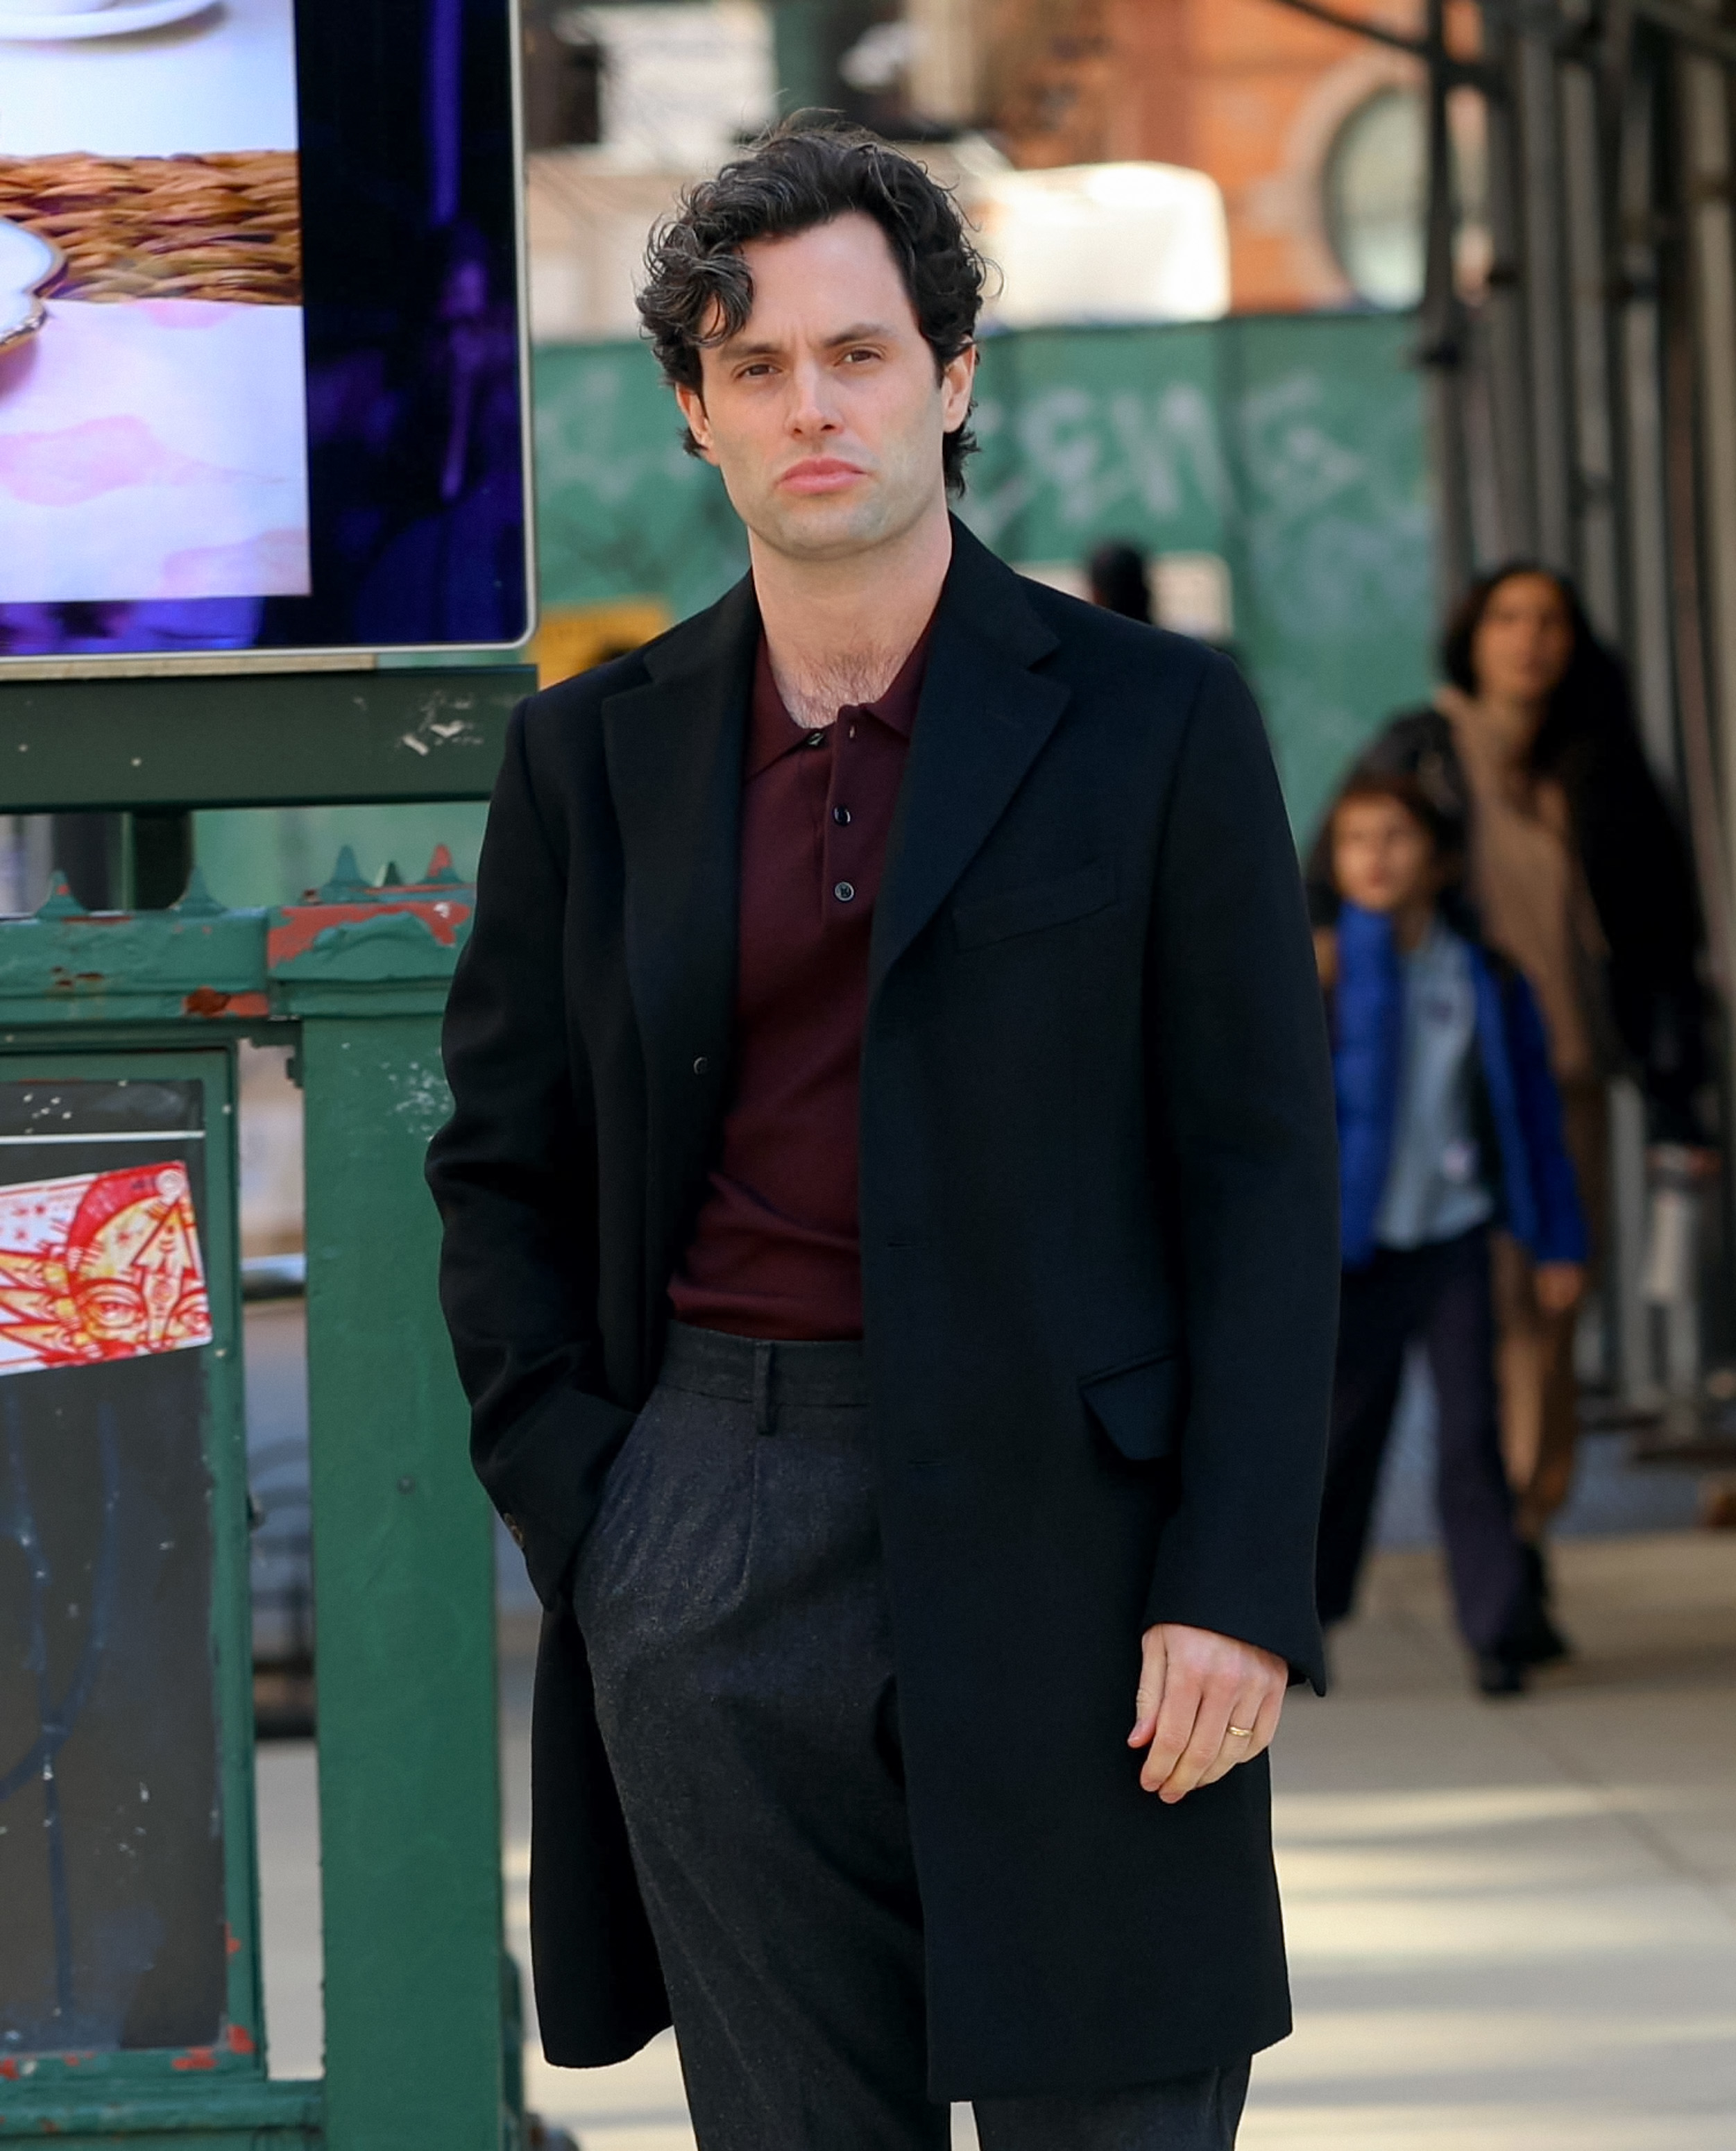 Penn in a black coat and gray trousers walking on a sidewalk